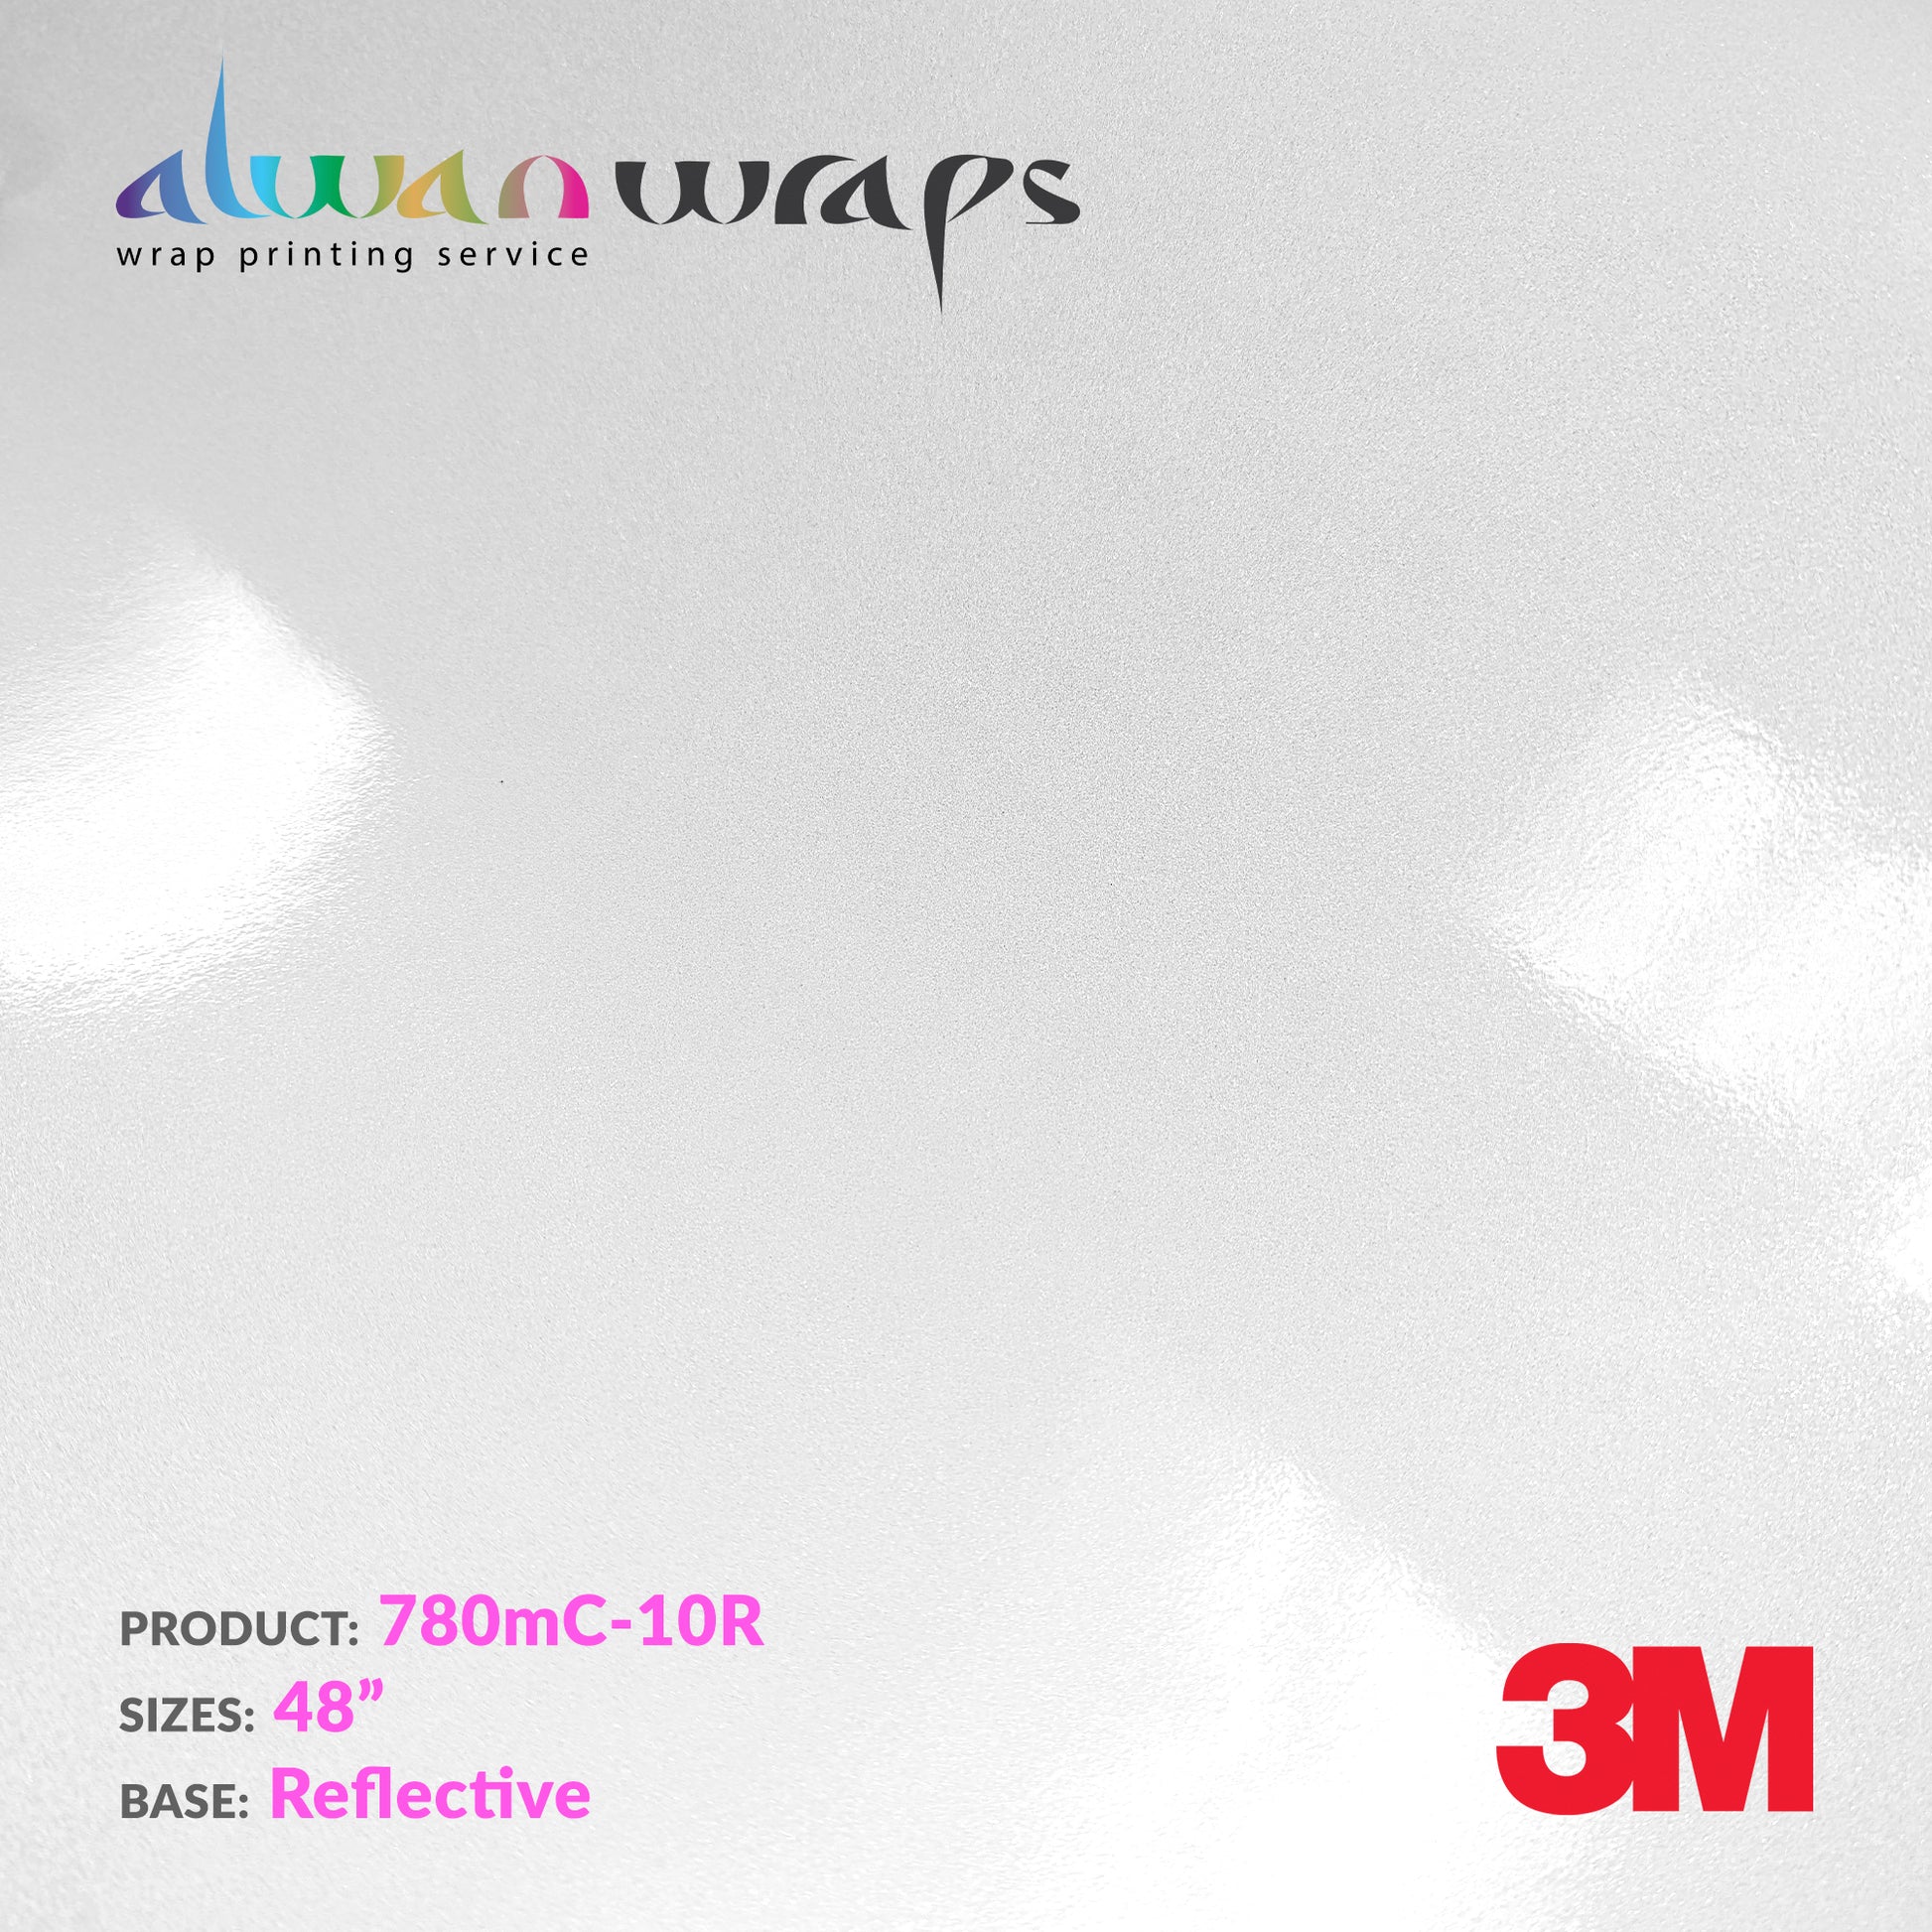 Reflective Vinyl Adhesive Cutter Sign Hight Reflectivity 24 x 10 Feet  WHITE